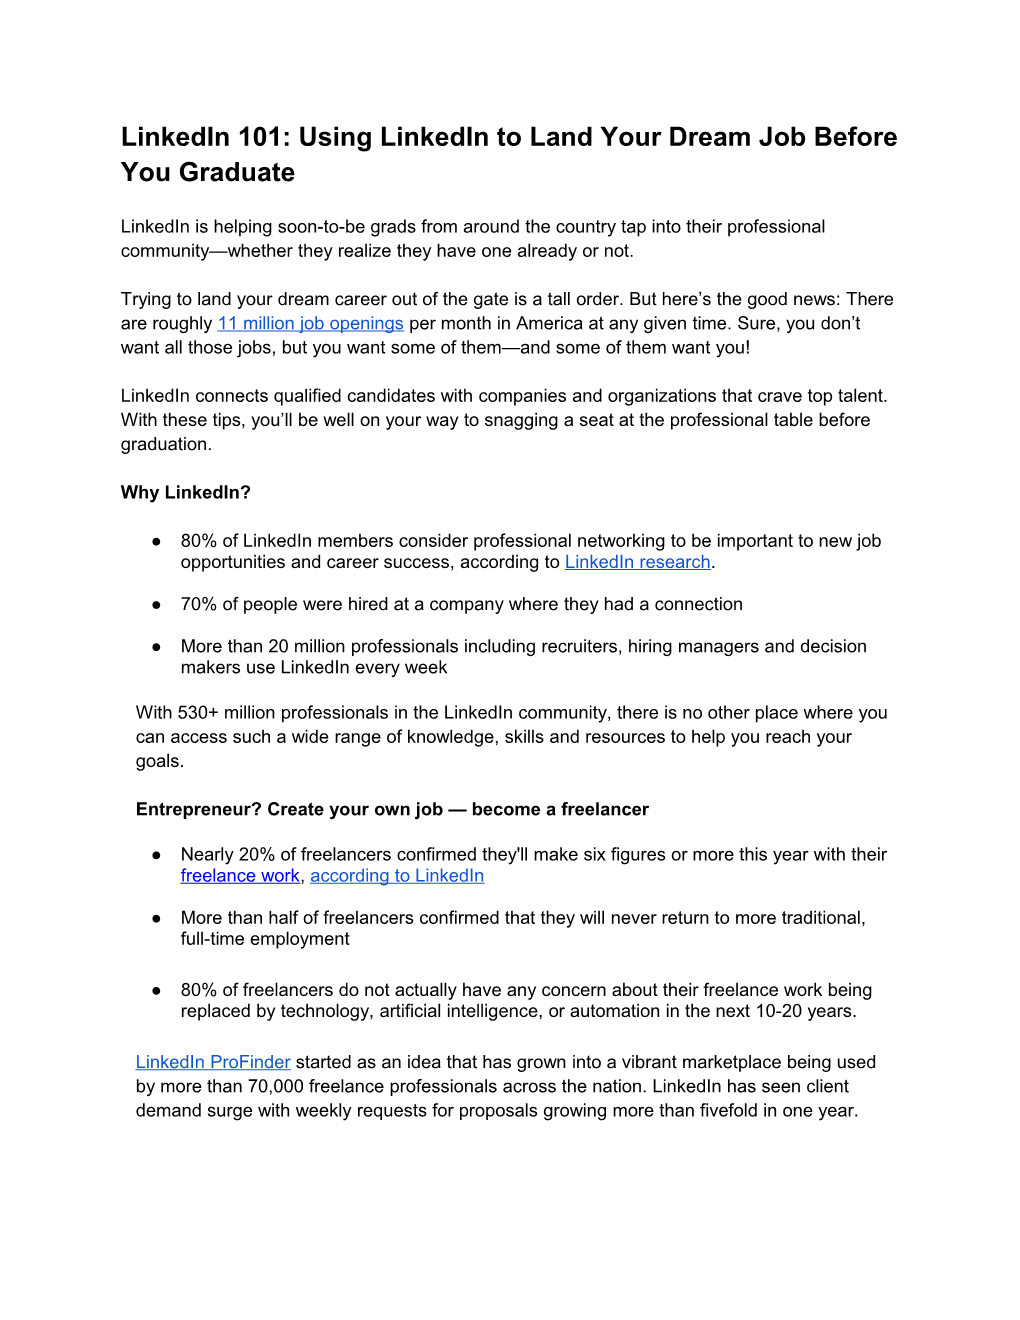 Linkedin 101: Using Linkedin to Land Your Dream Job Before You Graduate